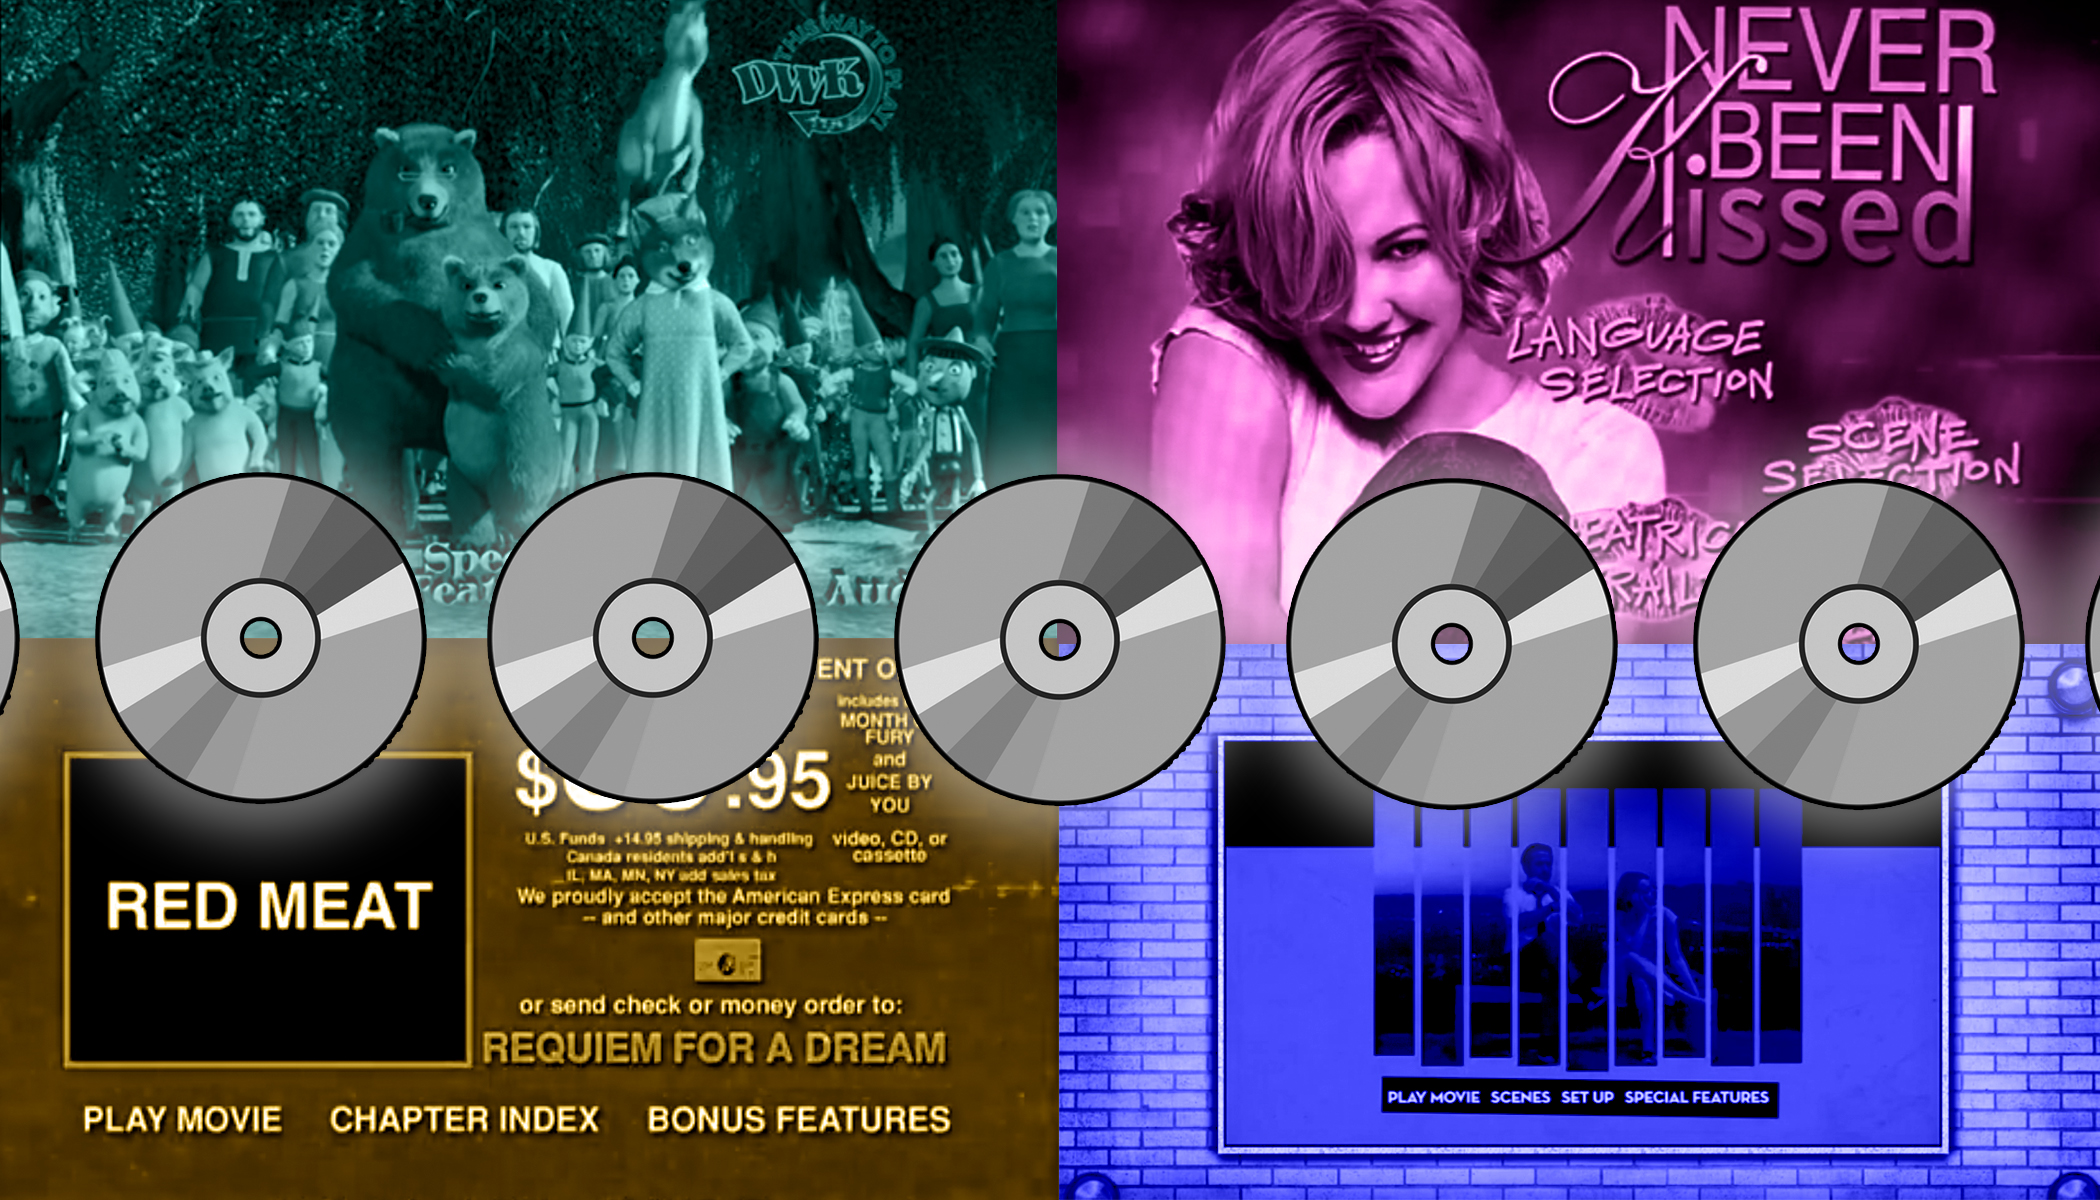 DVD menus for Shrek Fight Club Requiem for a Dream and La La Land.